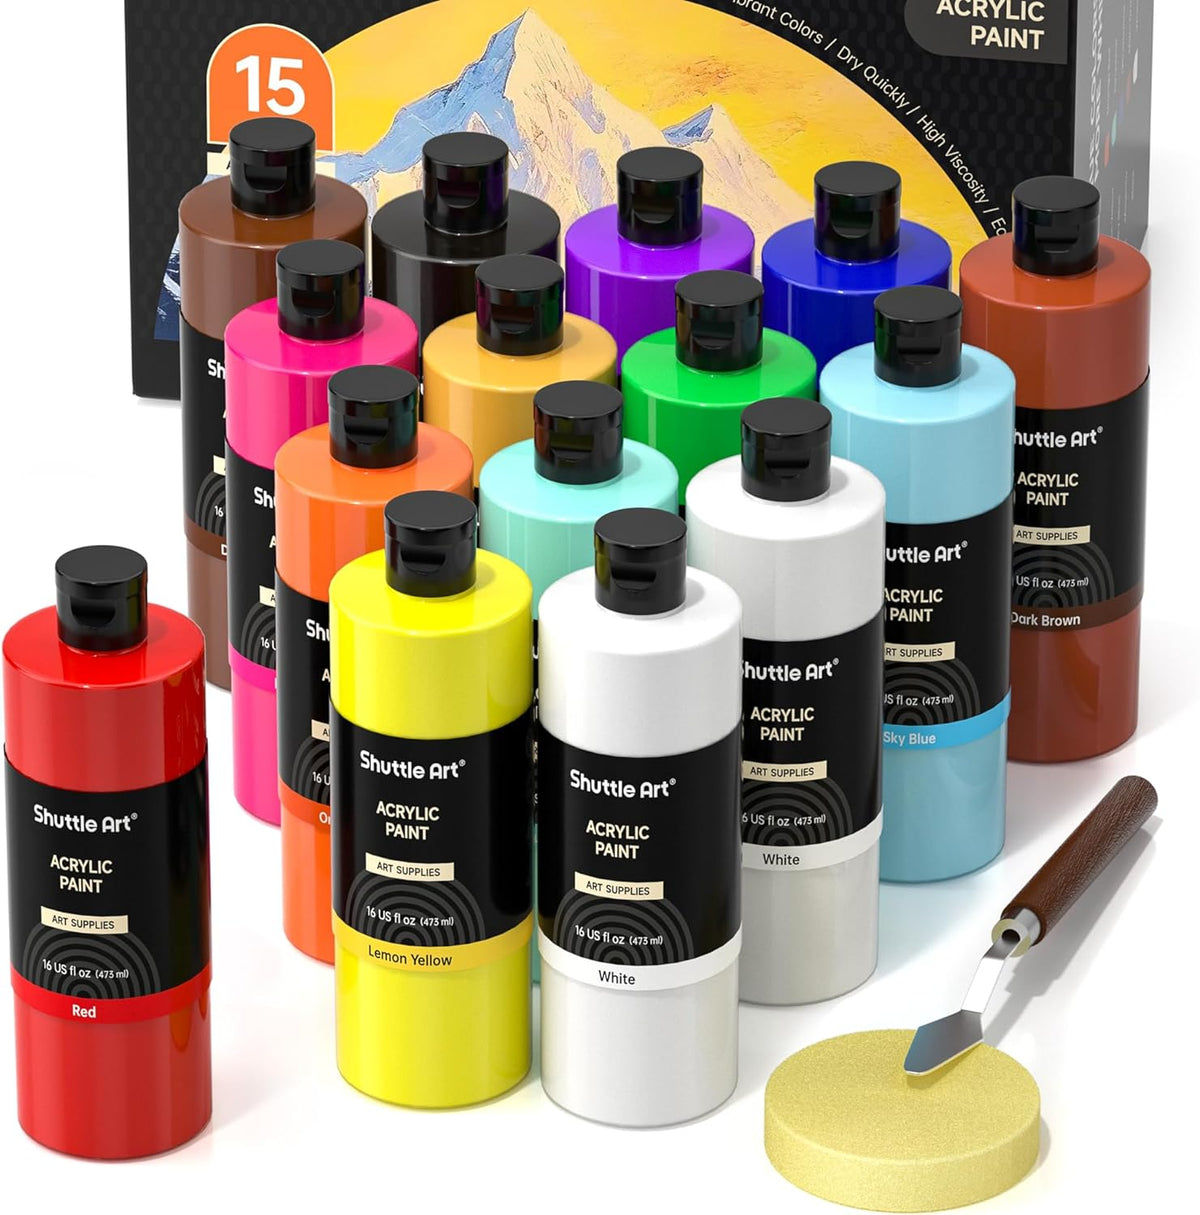 Acrylic Paint - Premium Acrylic Medium Dark Brown Paints, 4-fl.oz. - 6 Pack